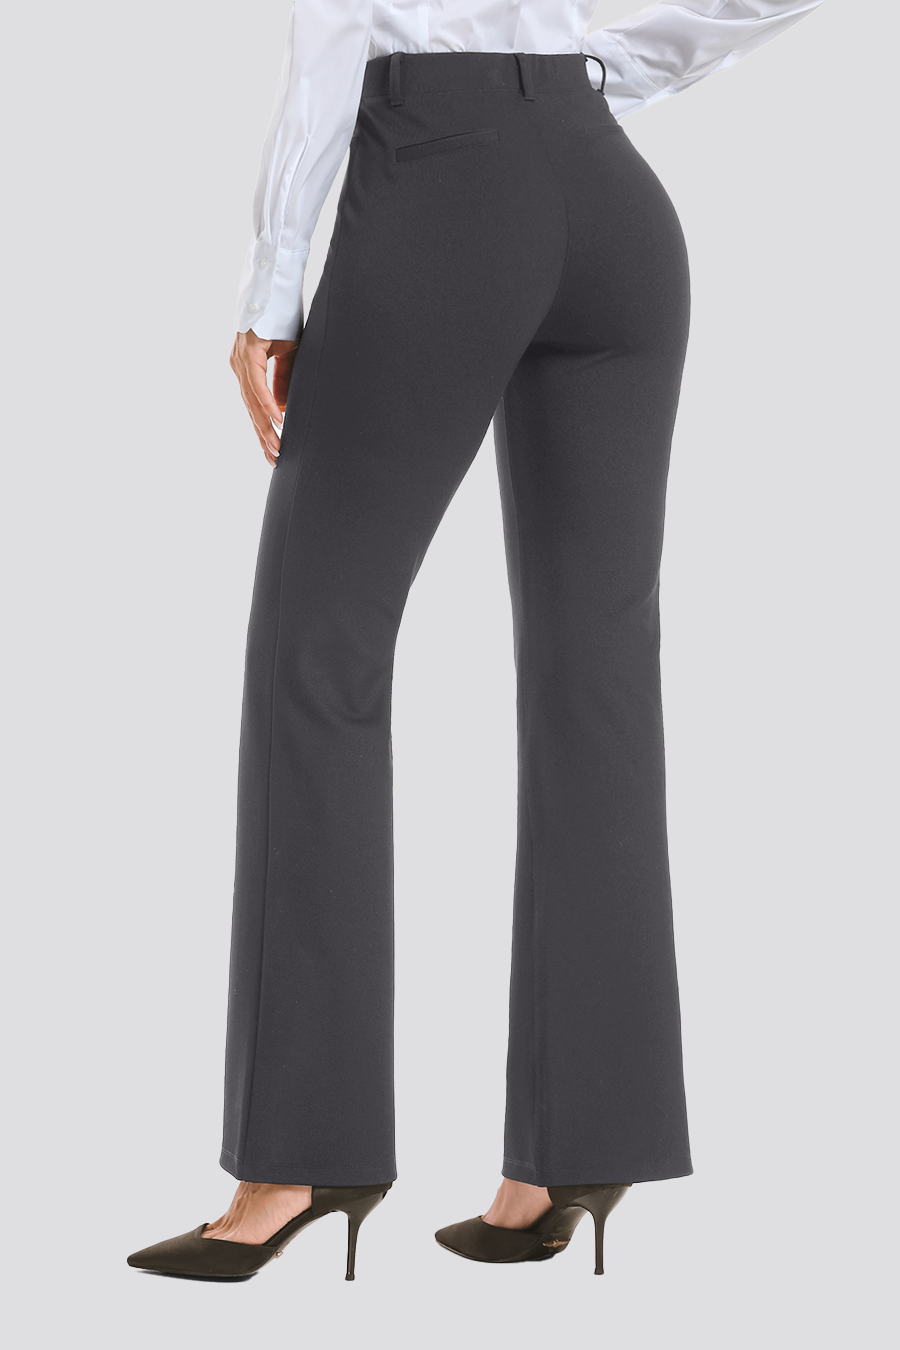 Stelle World Women's Business Casual Pants